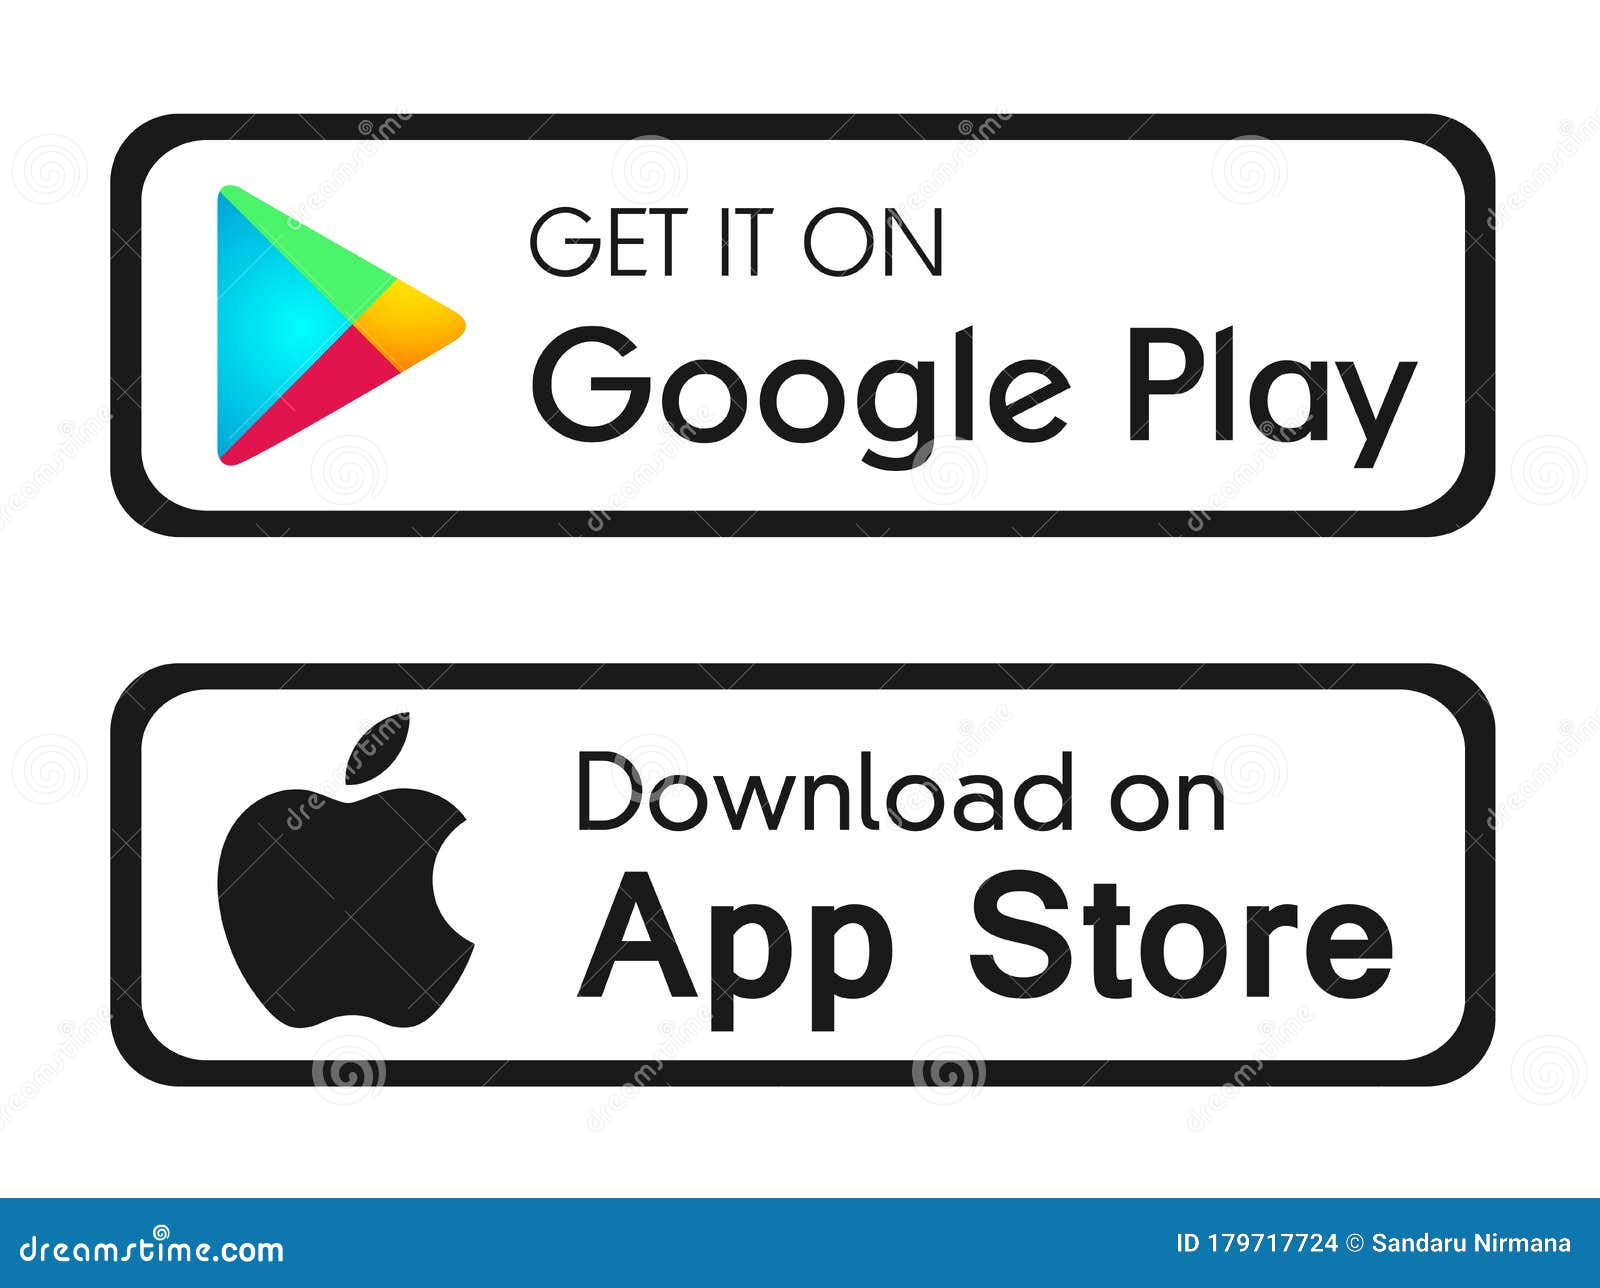 Getnet - Apps on Google Play